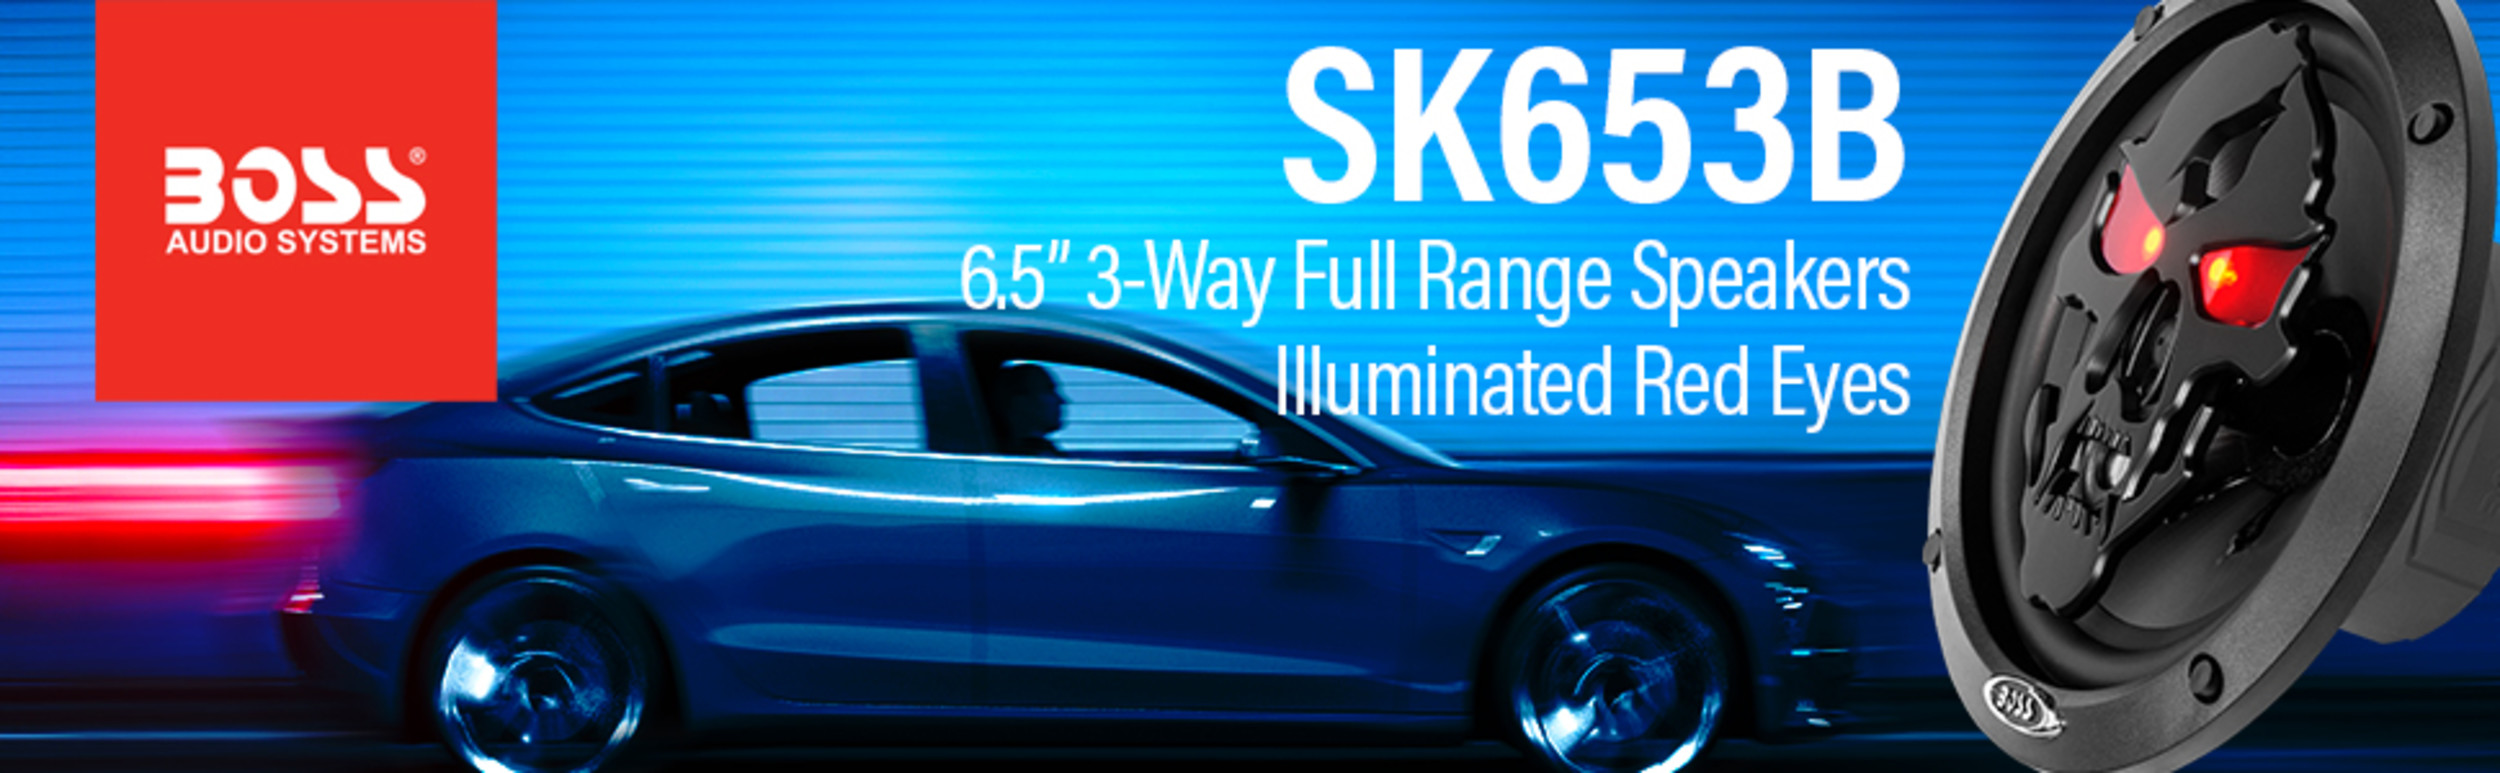 BOSS Audio Systems SK653B 6.5 Inch Car Speakers, 250 Watts Pair Full Range 2 Way - image 3 of 15